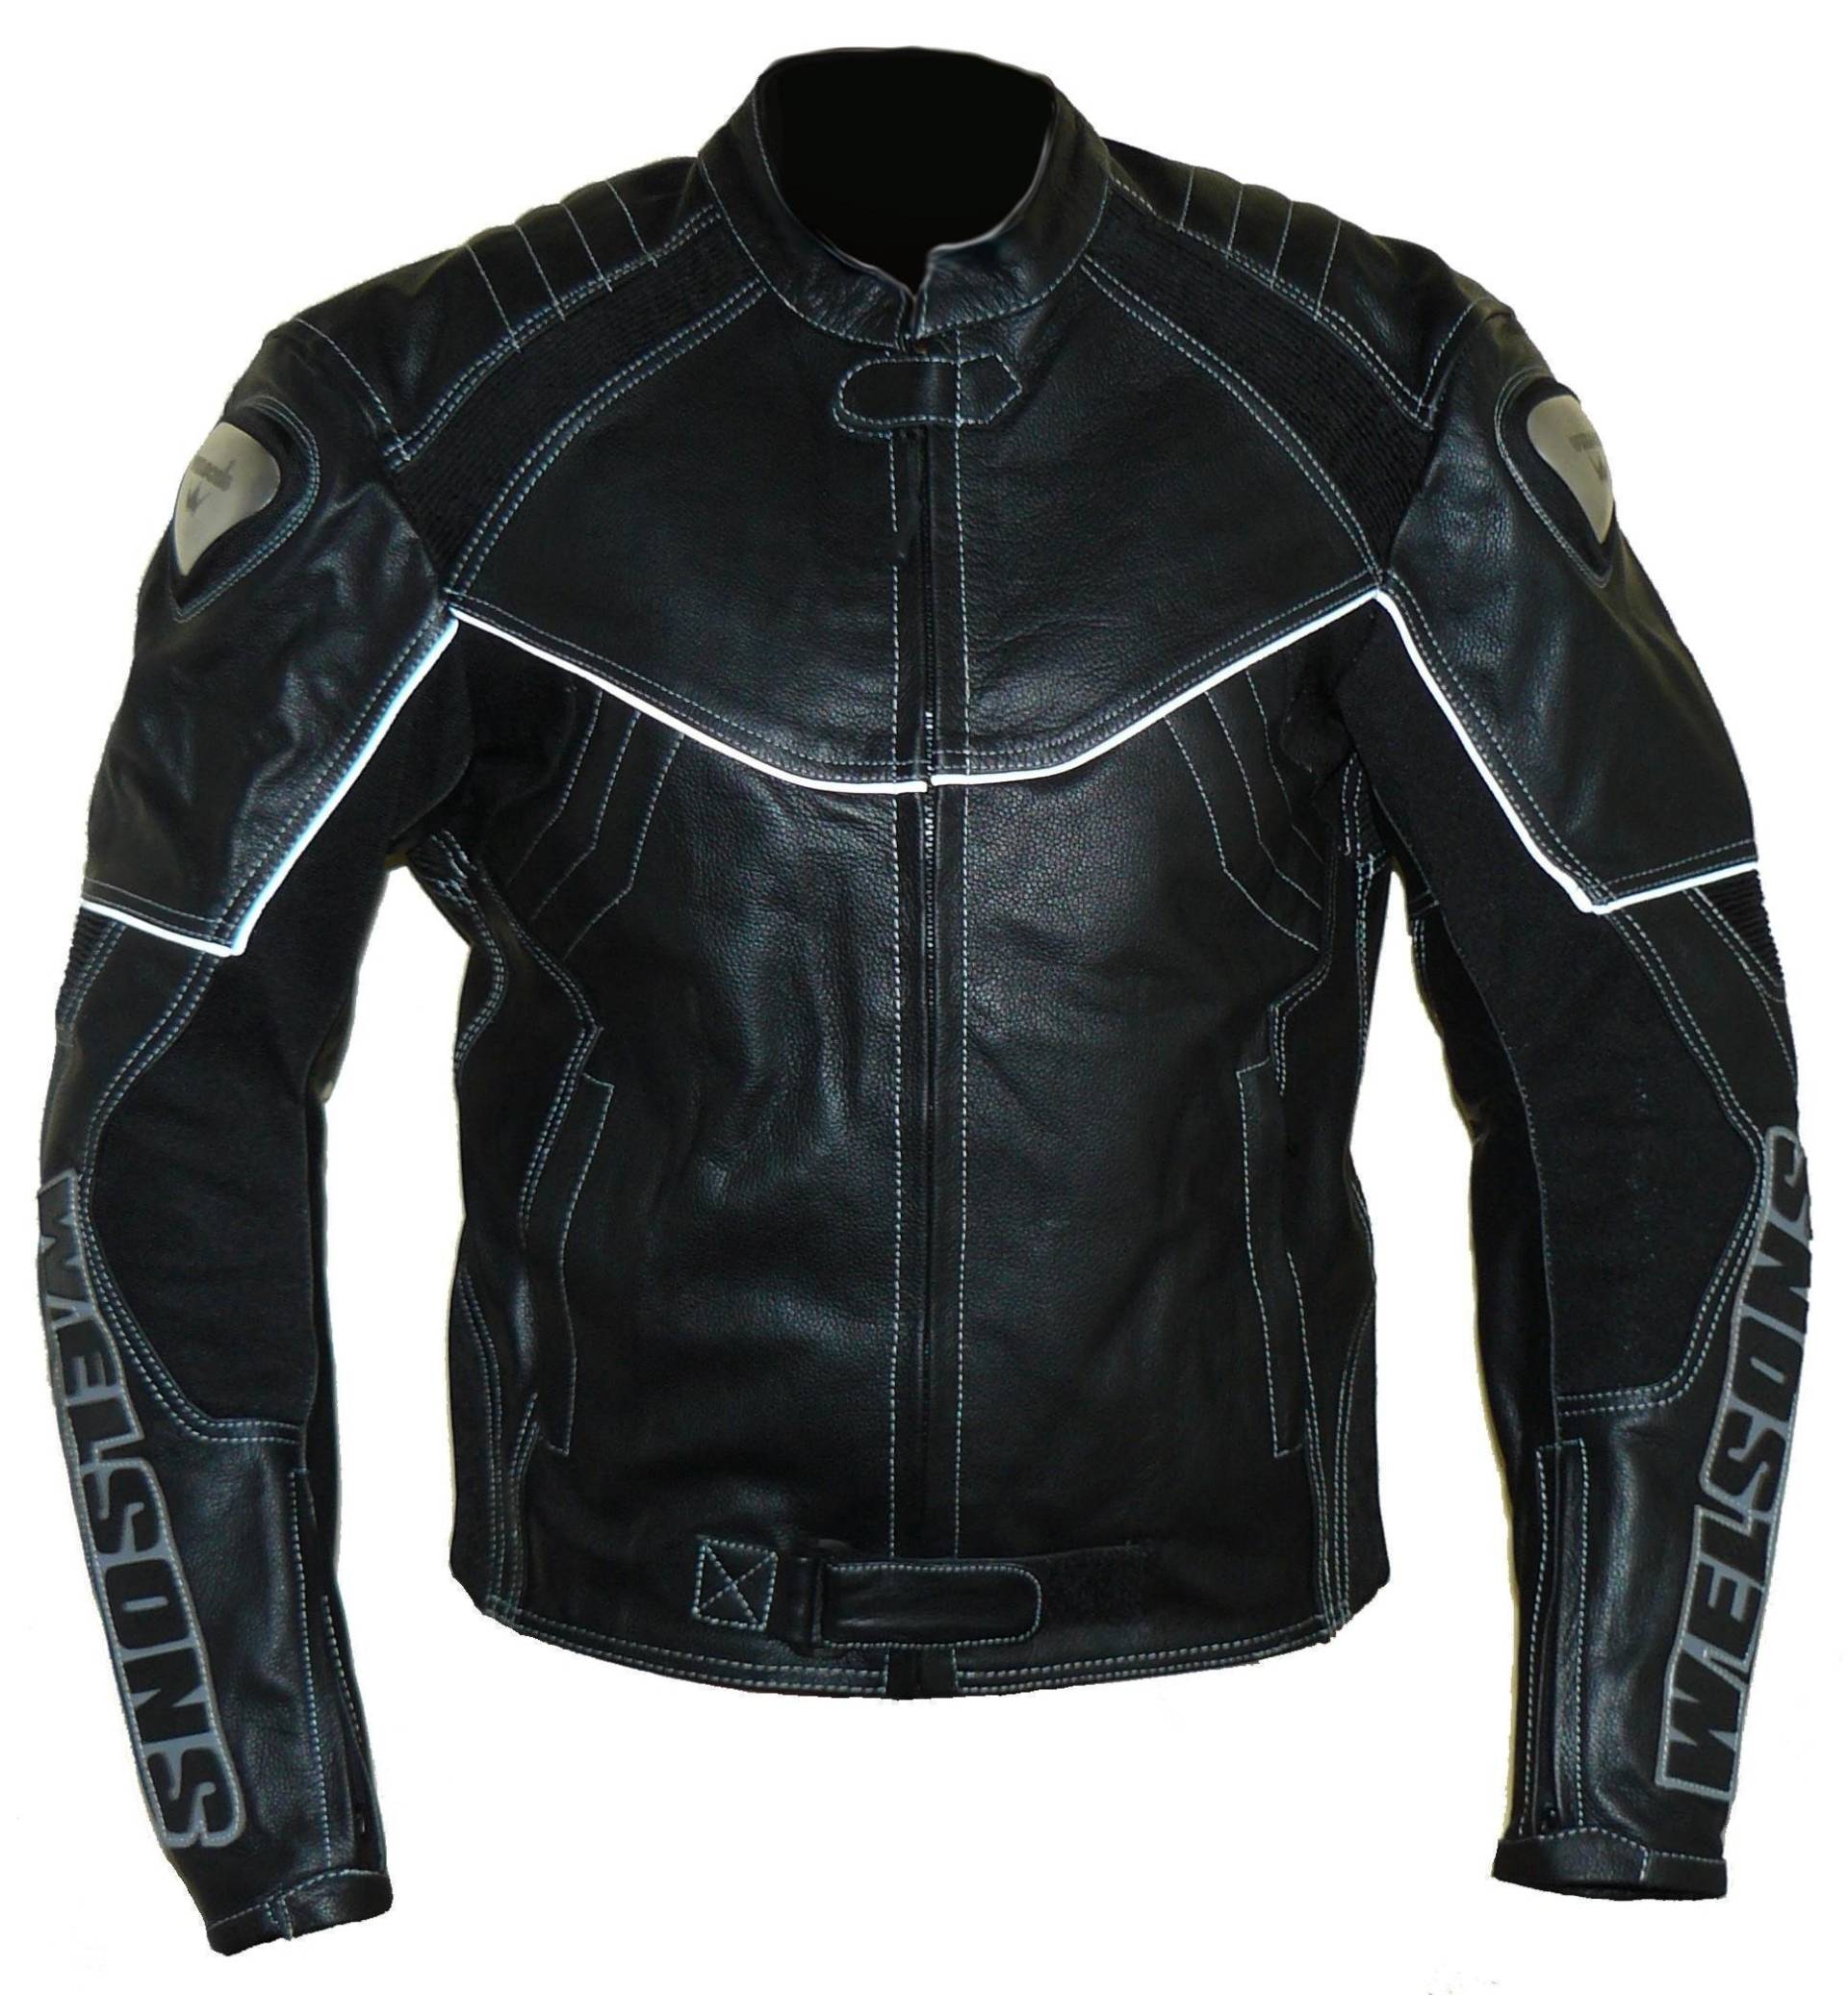 Protectwear WMB-303 Motorrad - Lederjacke,Größe : 58, schwarz von protectWEAR